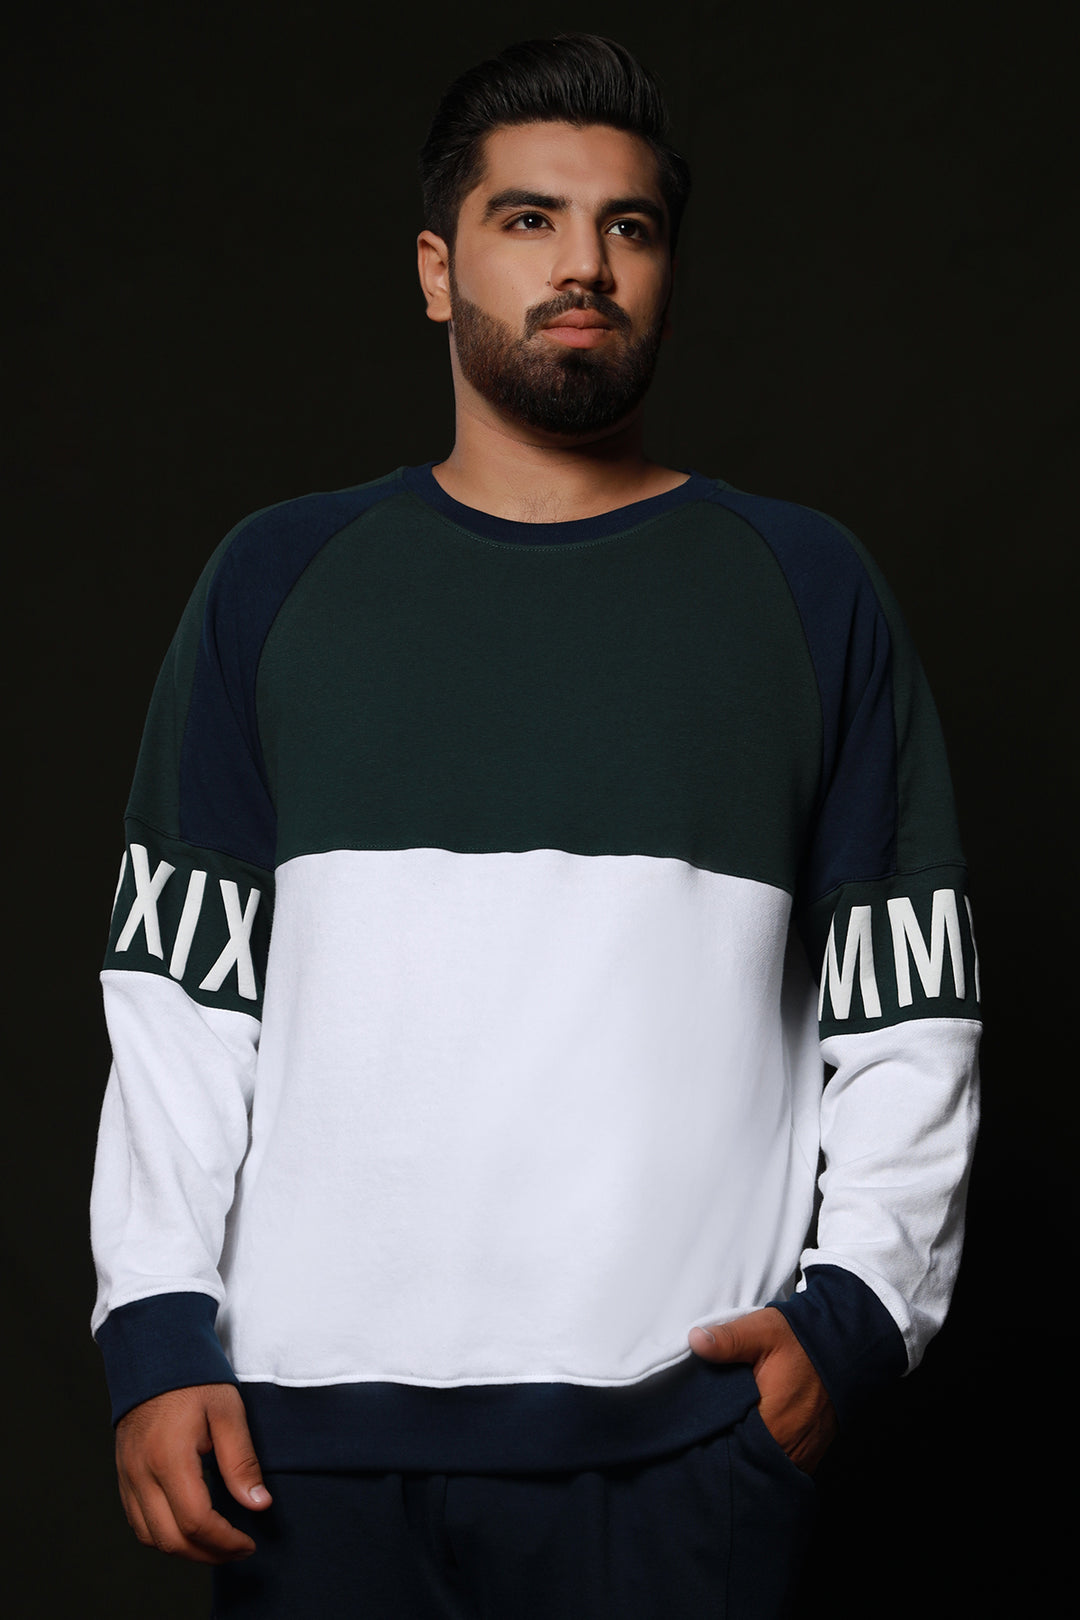 Teal & Blue MMXIX Sweatshirt (Plus Size)